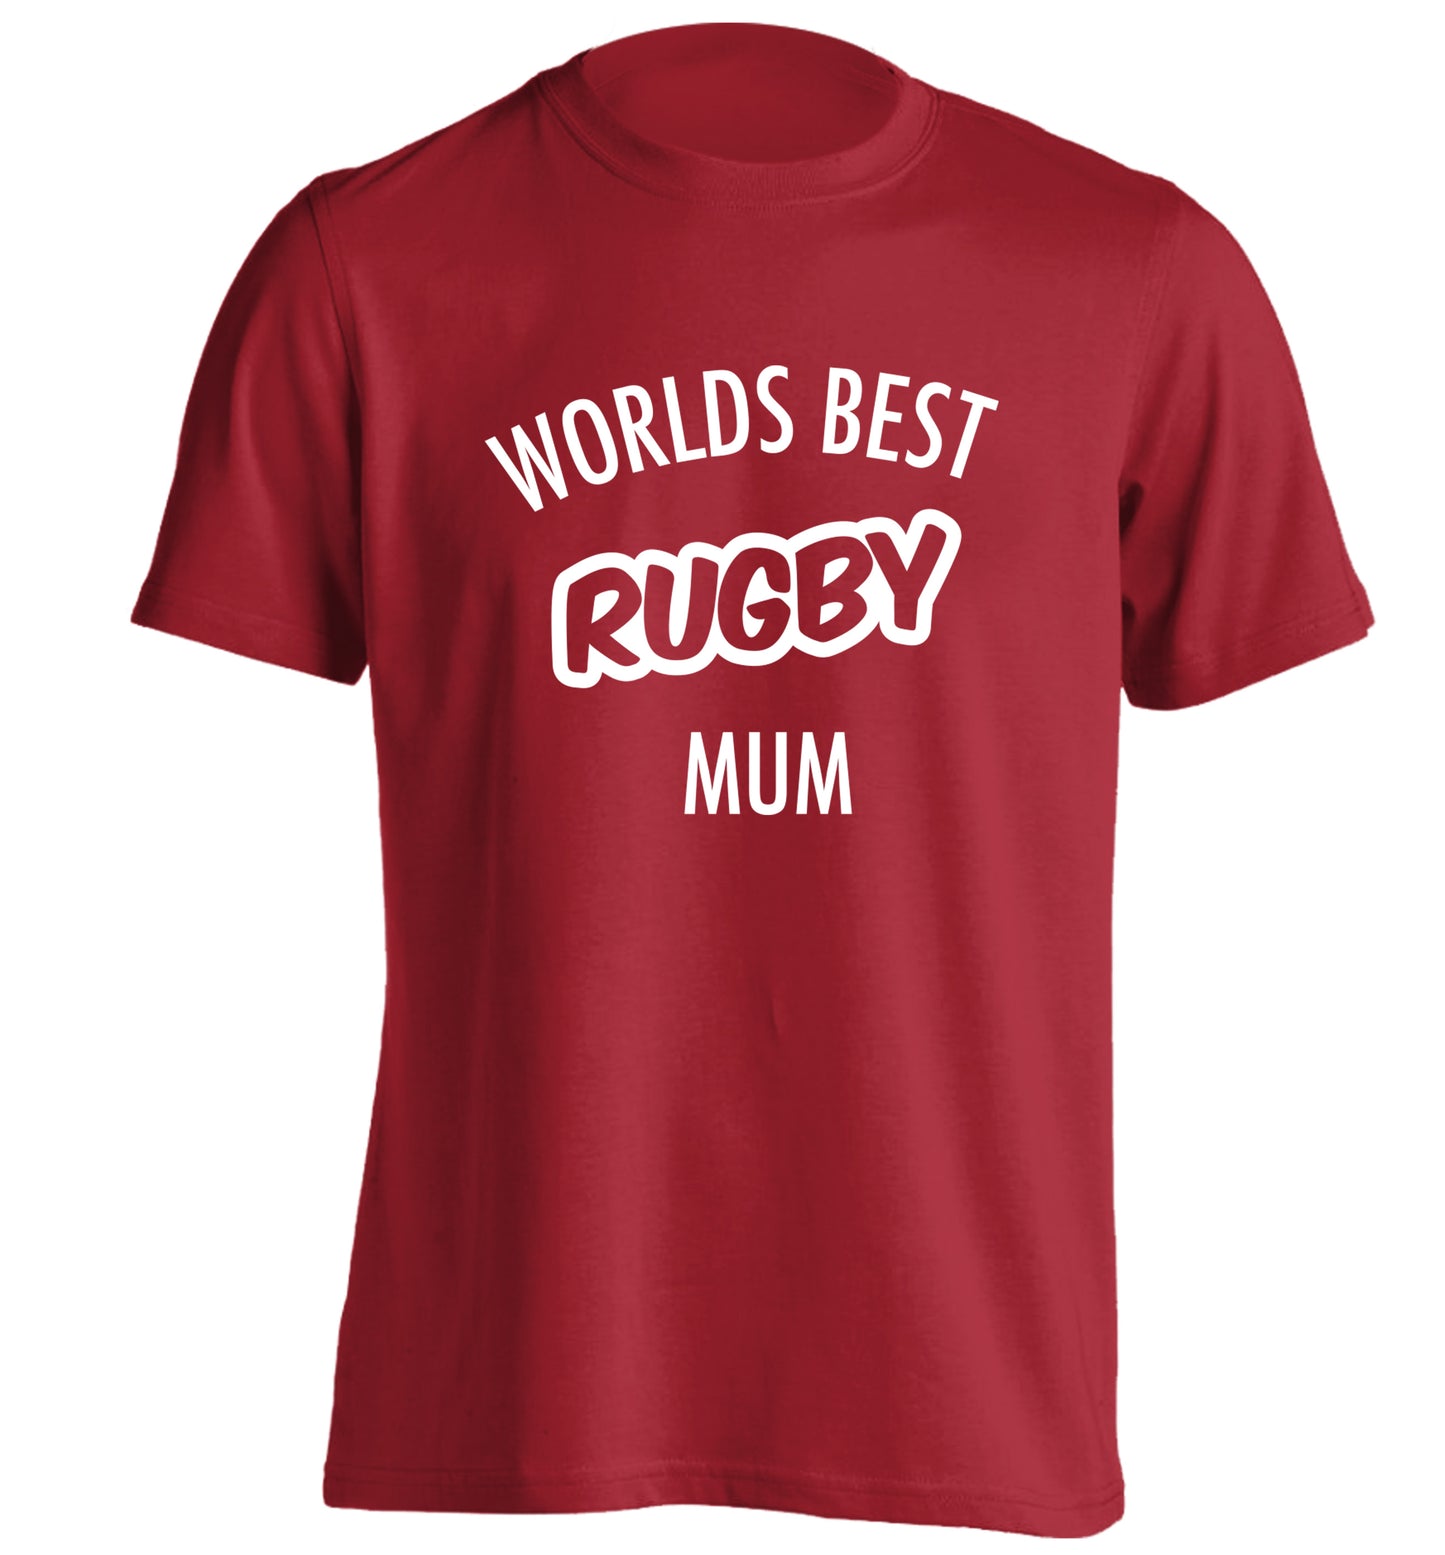 Worlds best rugby mum adults unisex red Tshirt 2XL